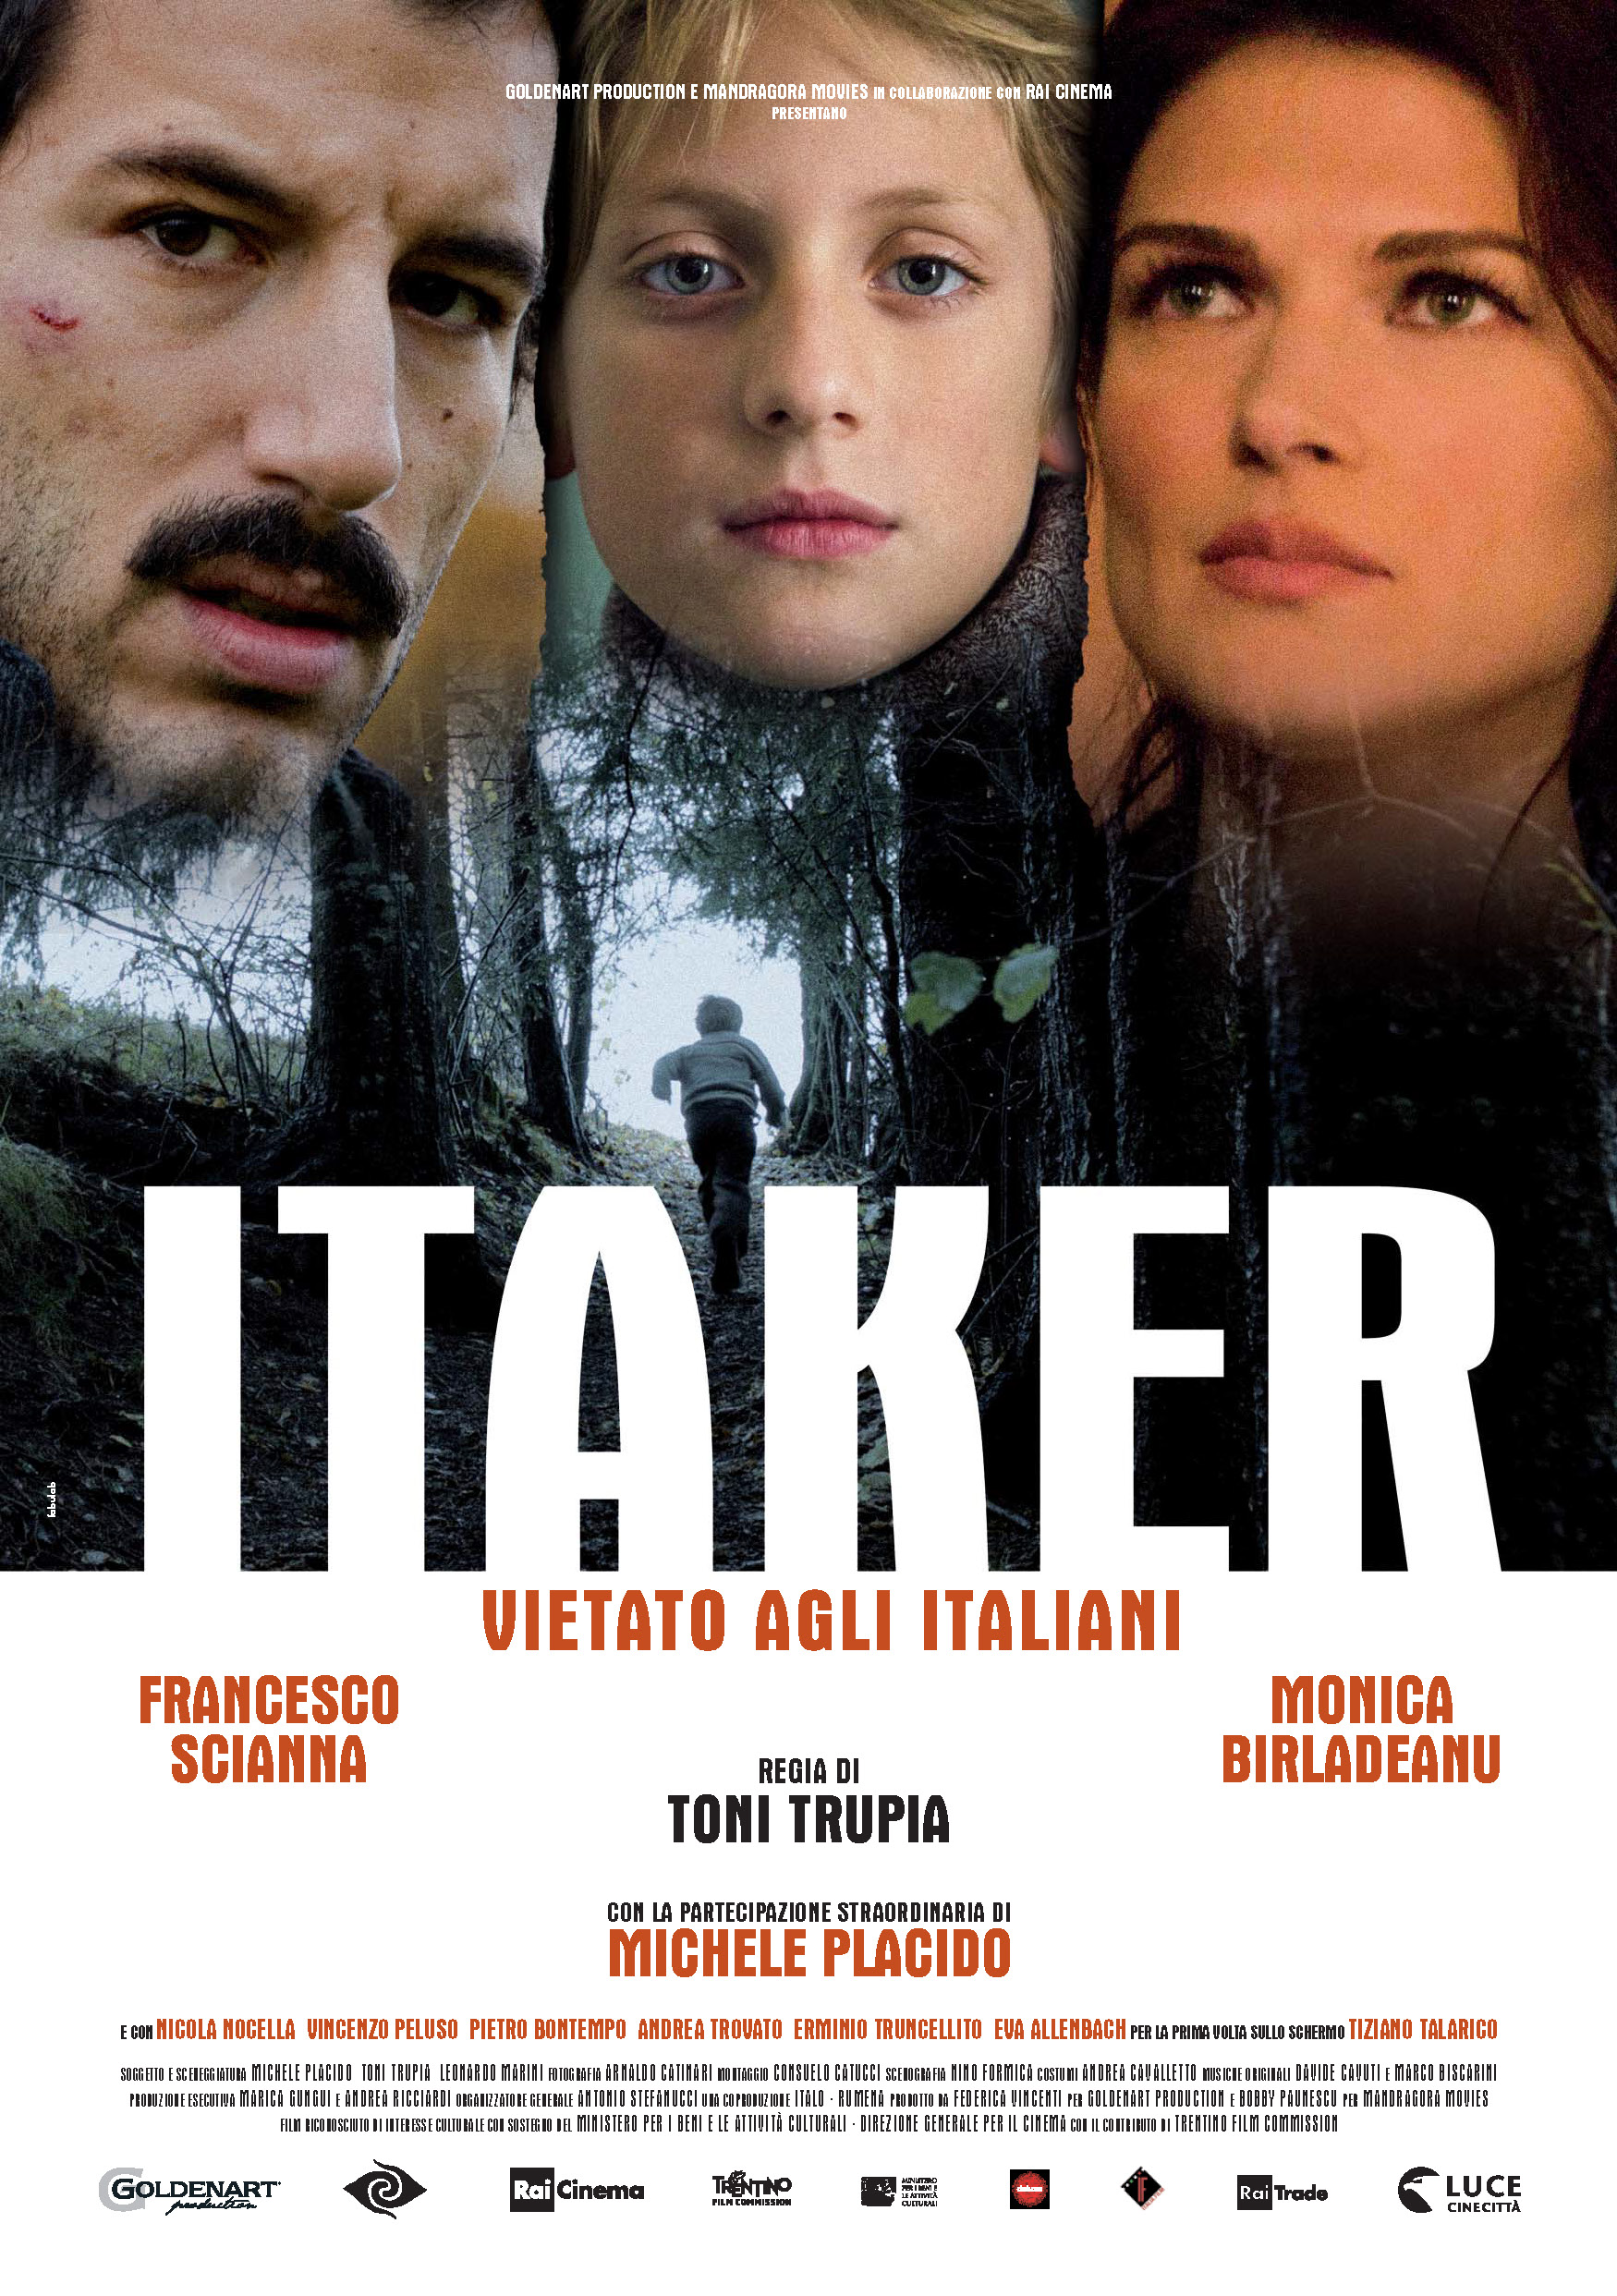 Itaker - Vietato agli italiani (2012) Screenshot 1